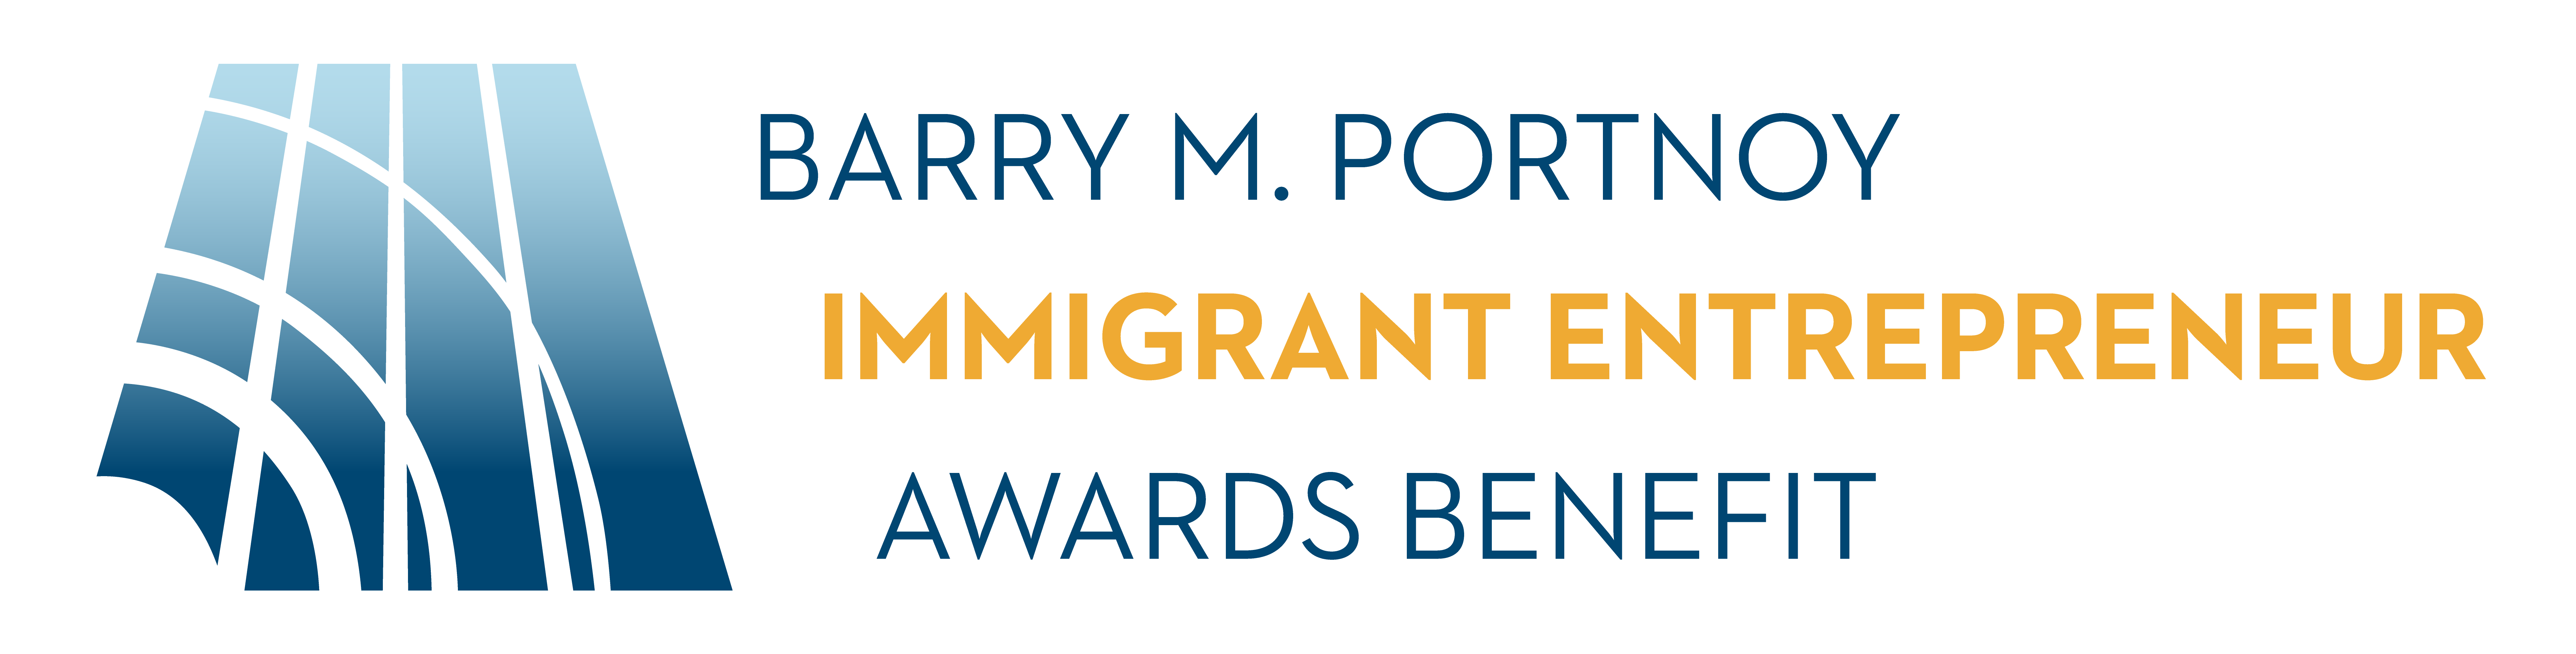 Barry M. Portnoy Immigrant Entrepreneur Awards Benefit logo